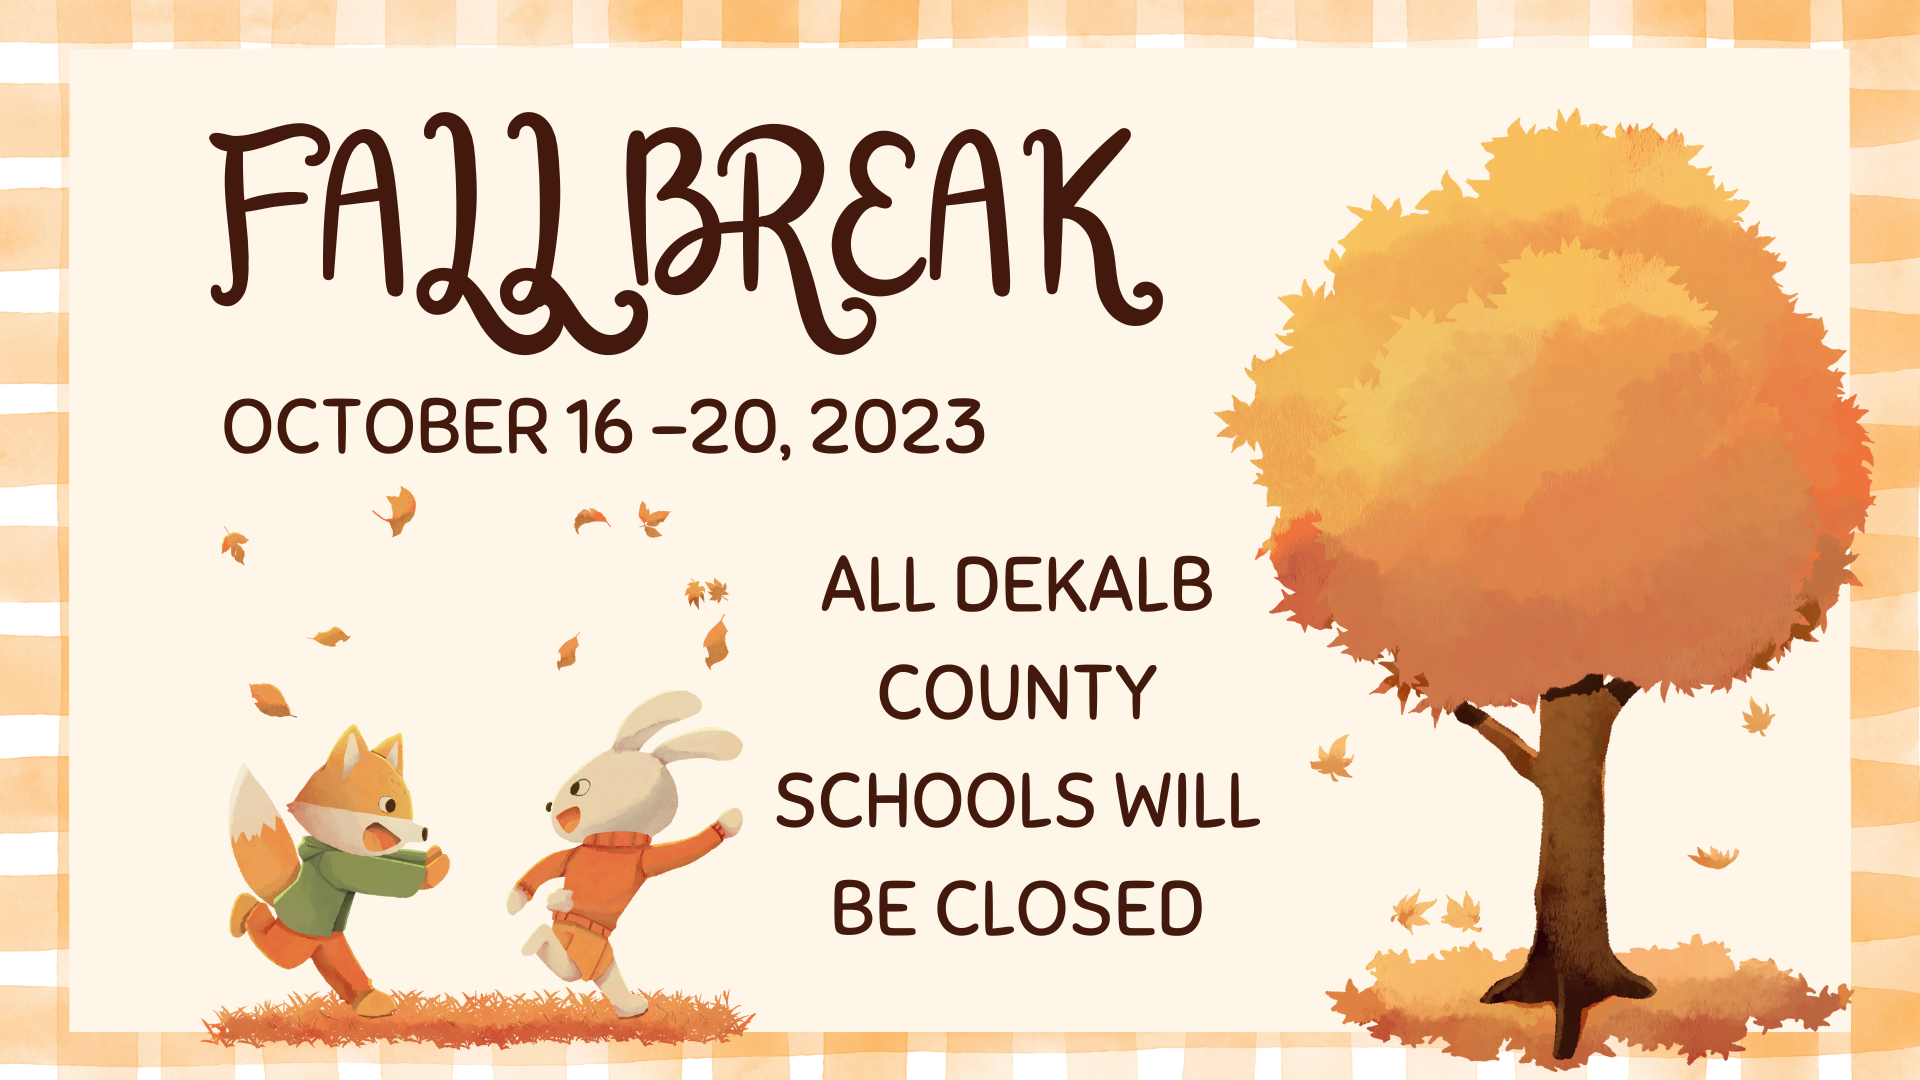 OCTOBER 16 - 20, 2023 DEKALB COUNTY SCHOOLS WILL BE CLOSED